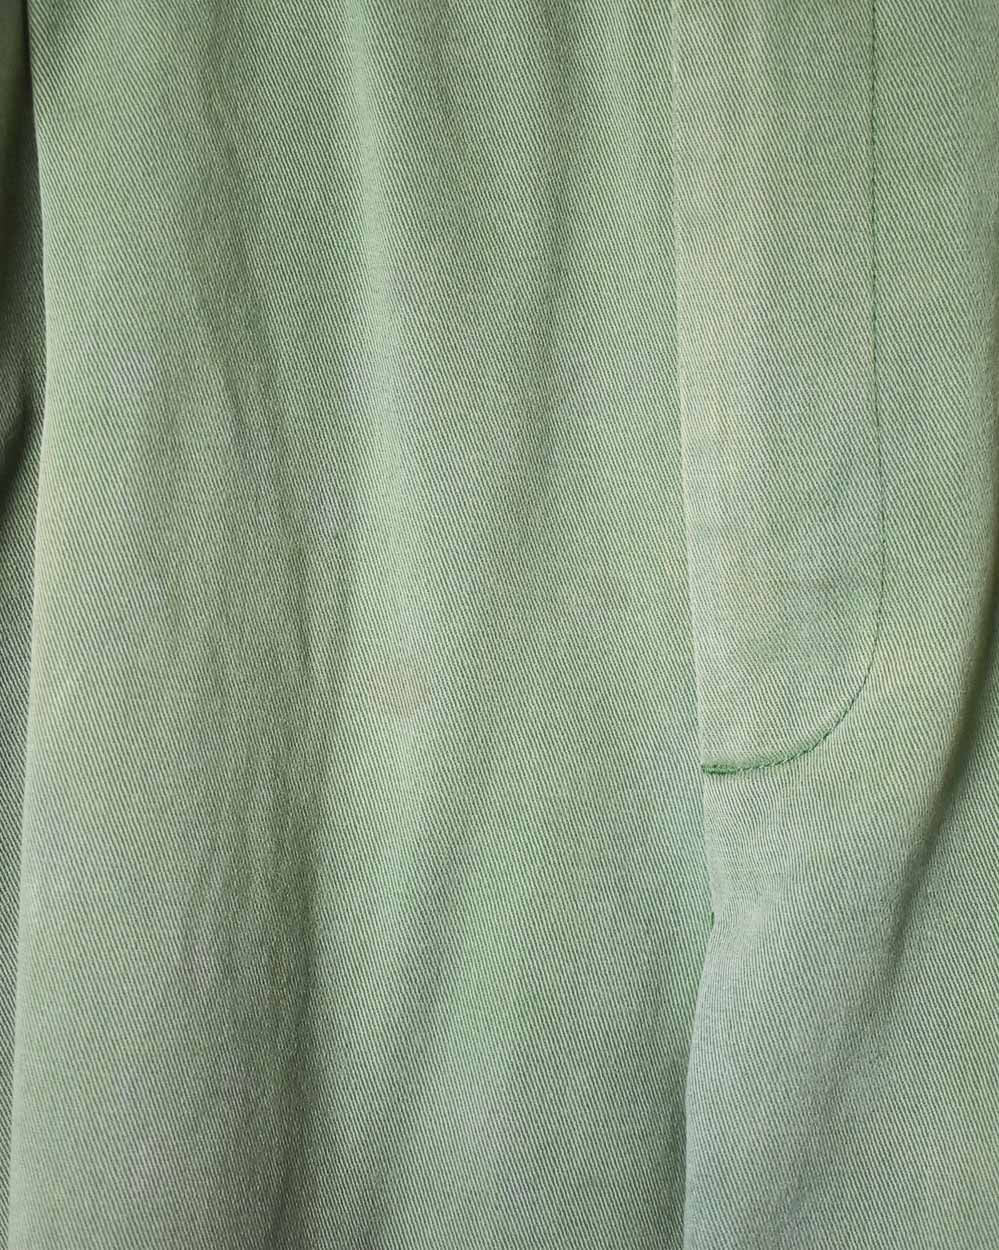 Green Burberry Trousers - W38 L28